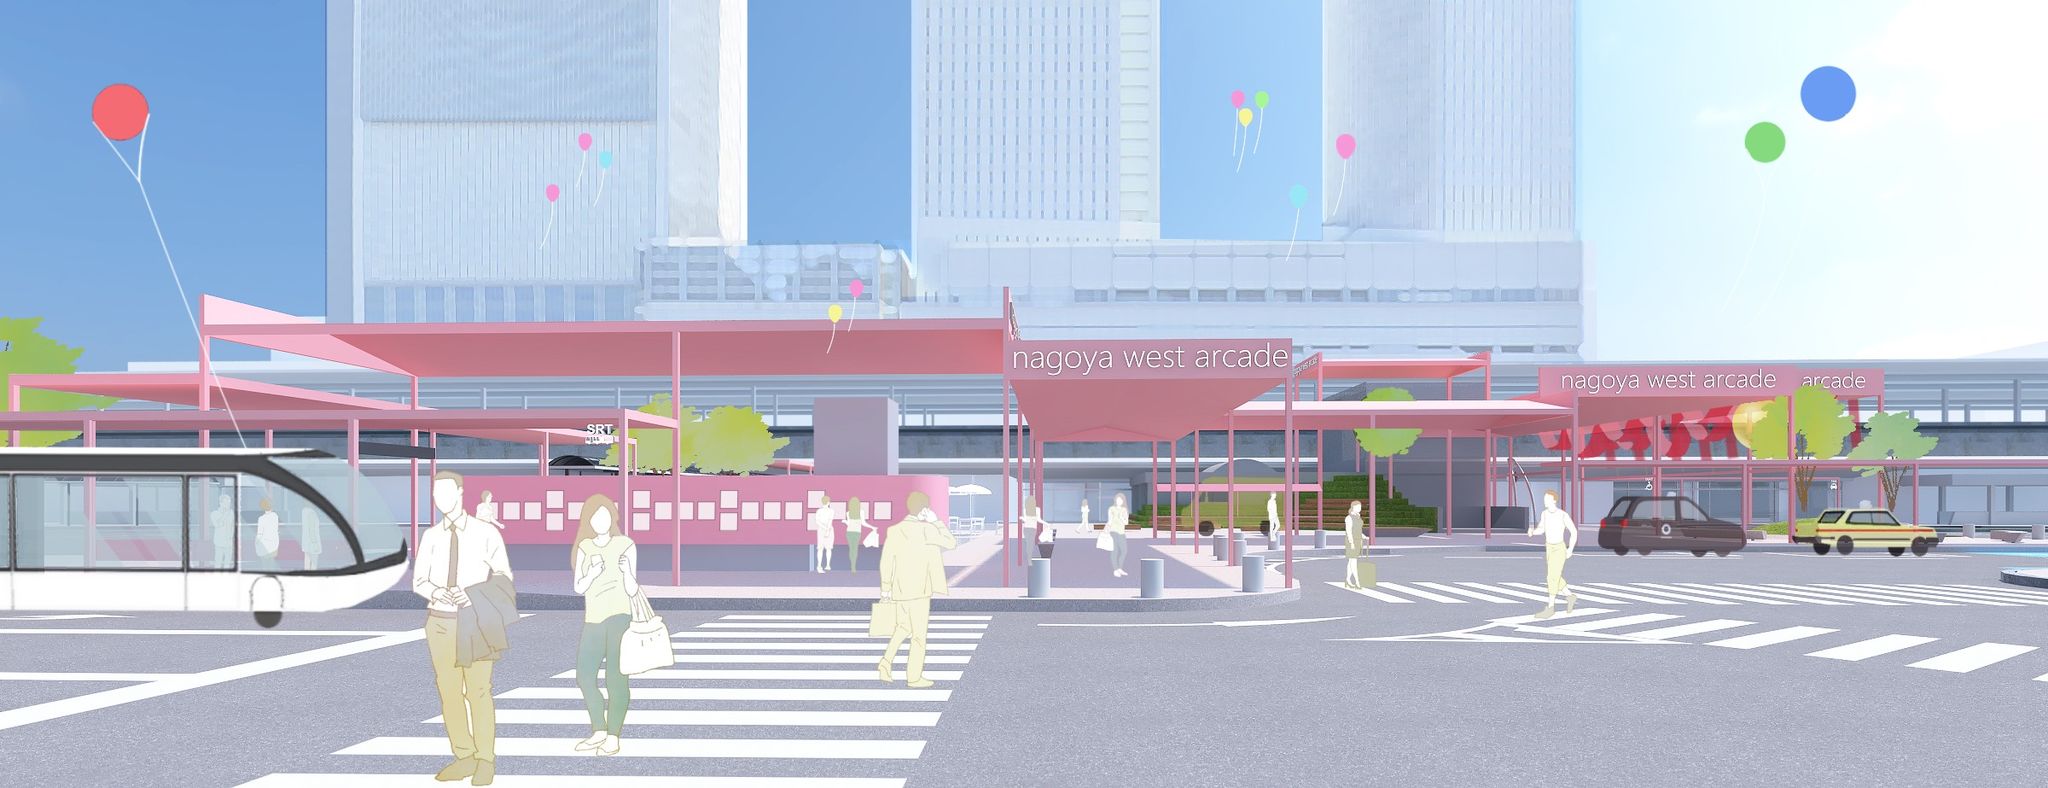 Nagoya Station West Gate Square Competition